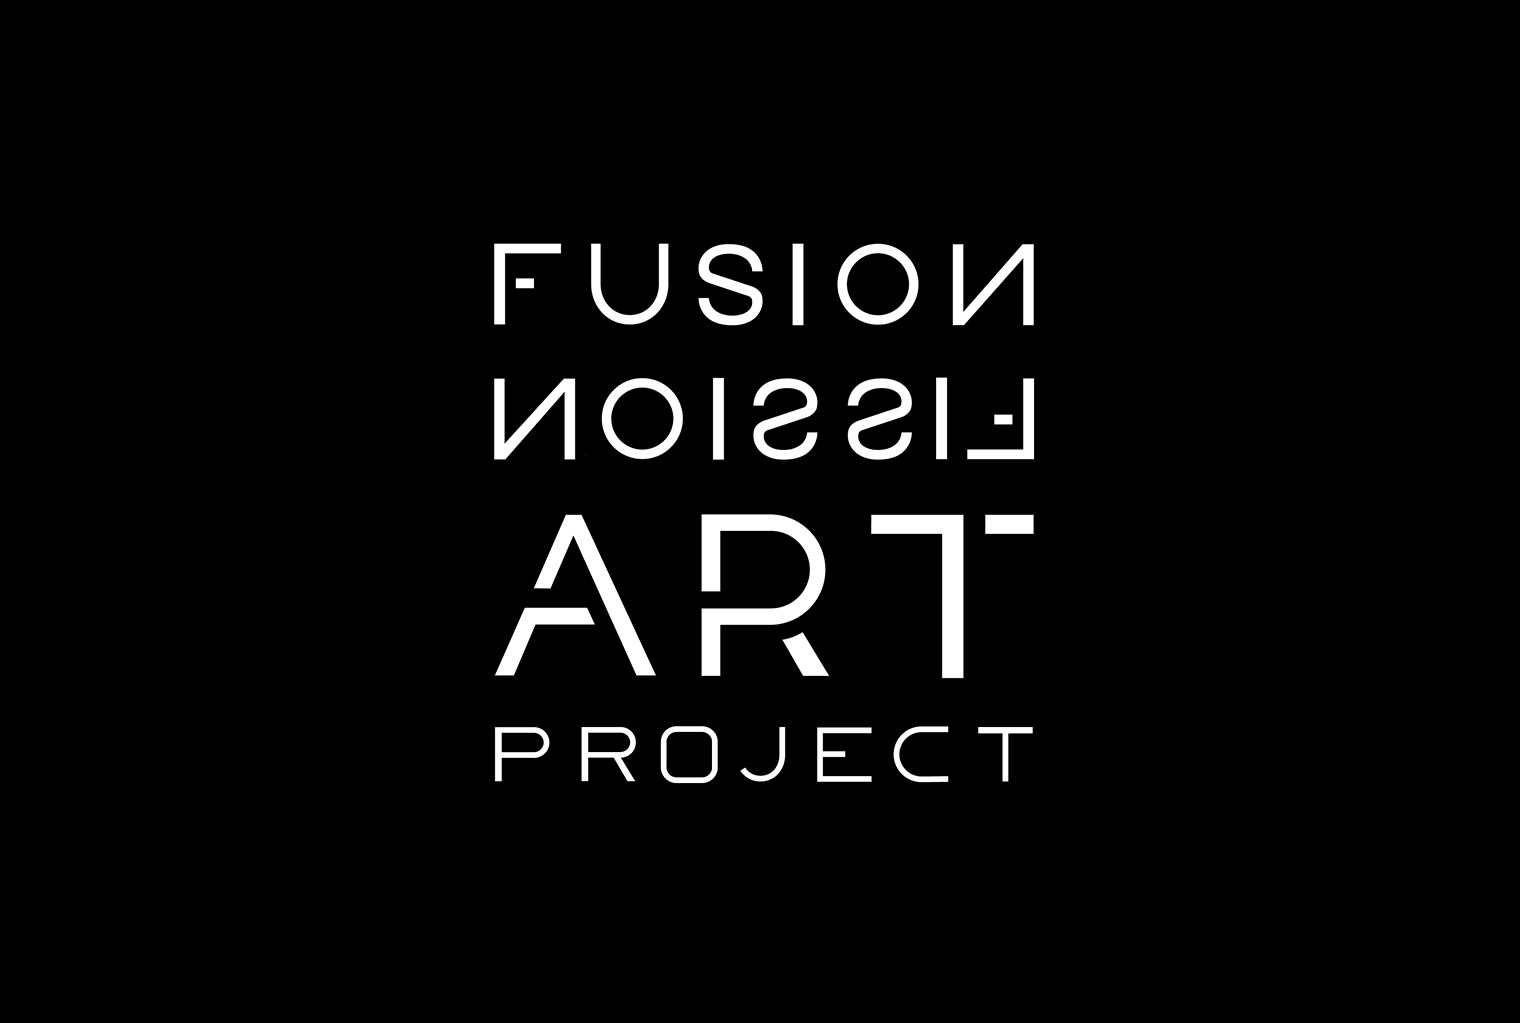 Fusion fission art project logo